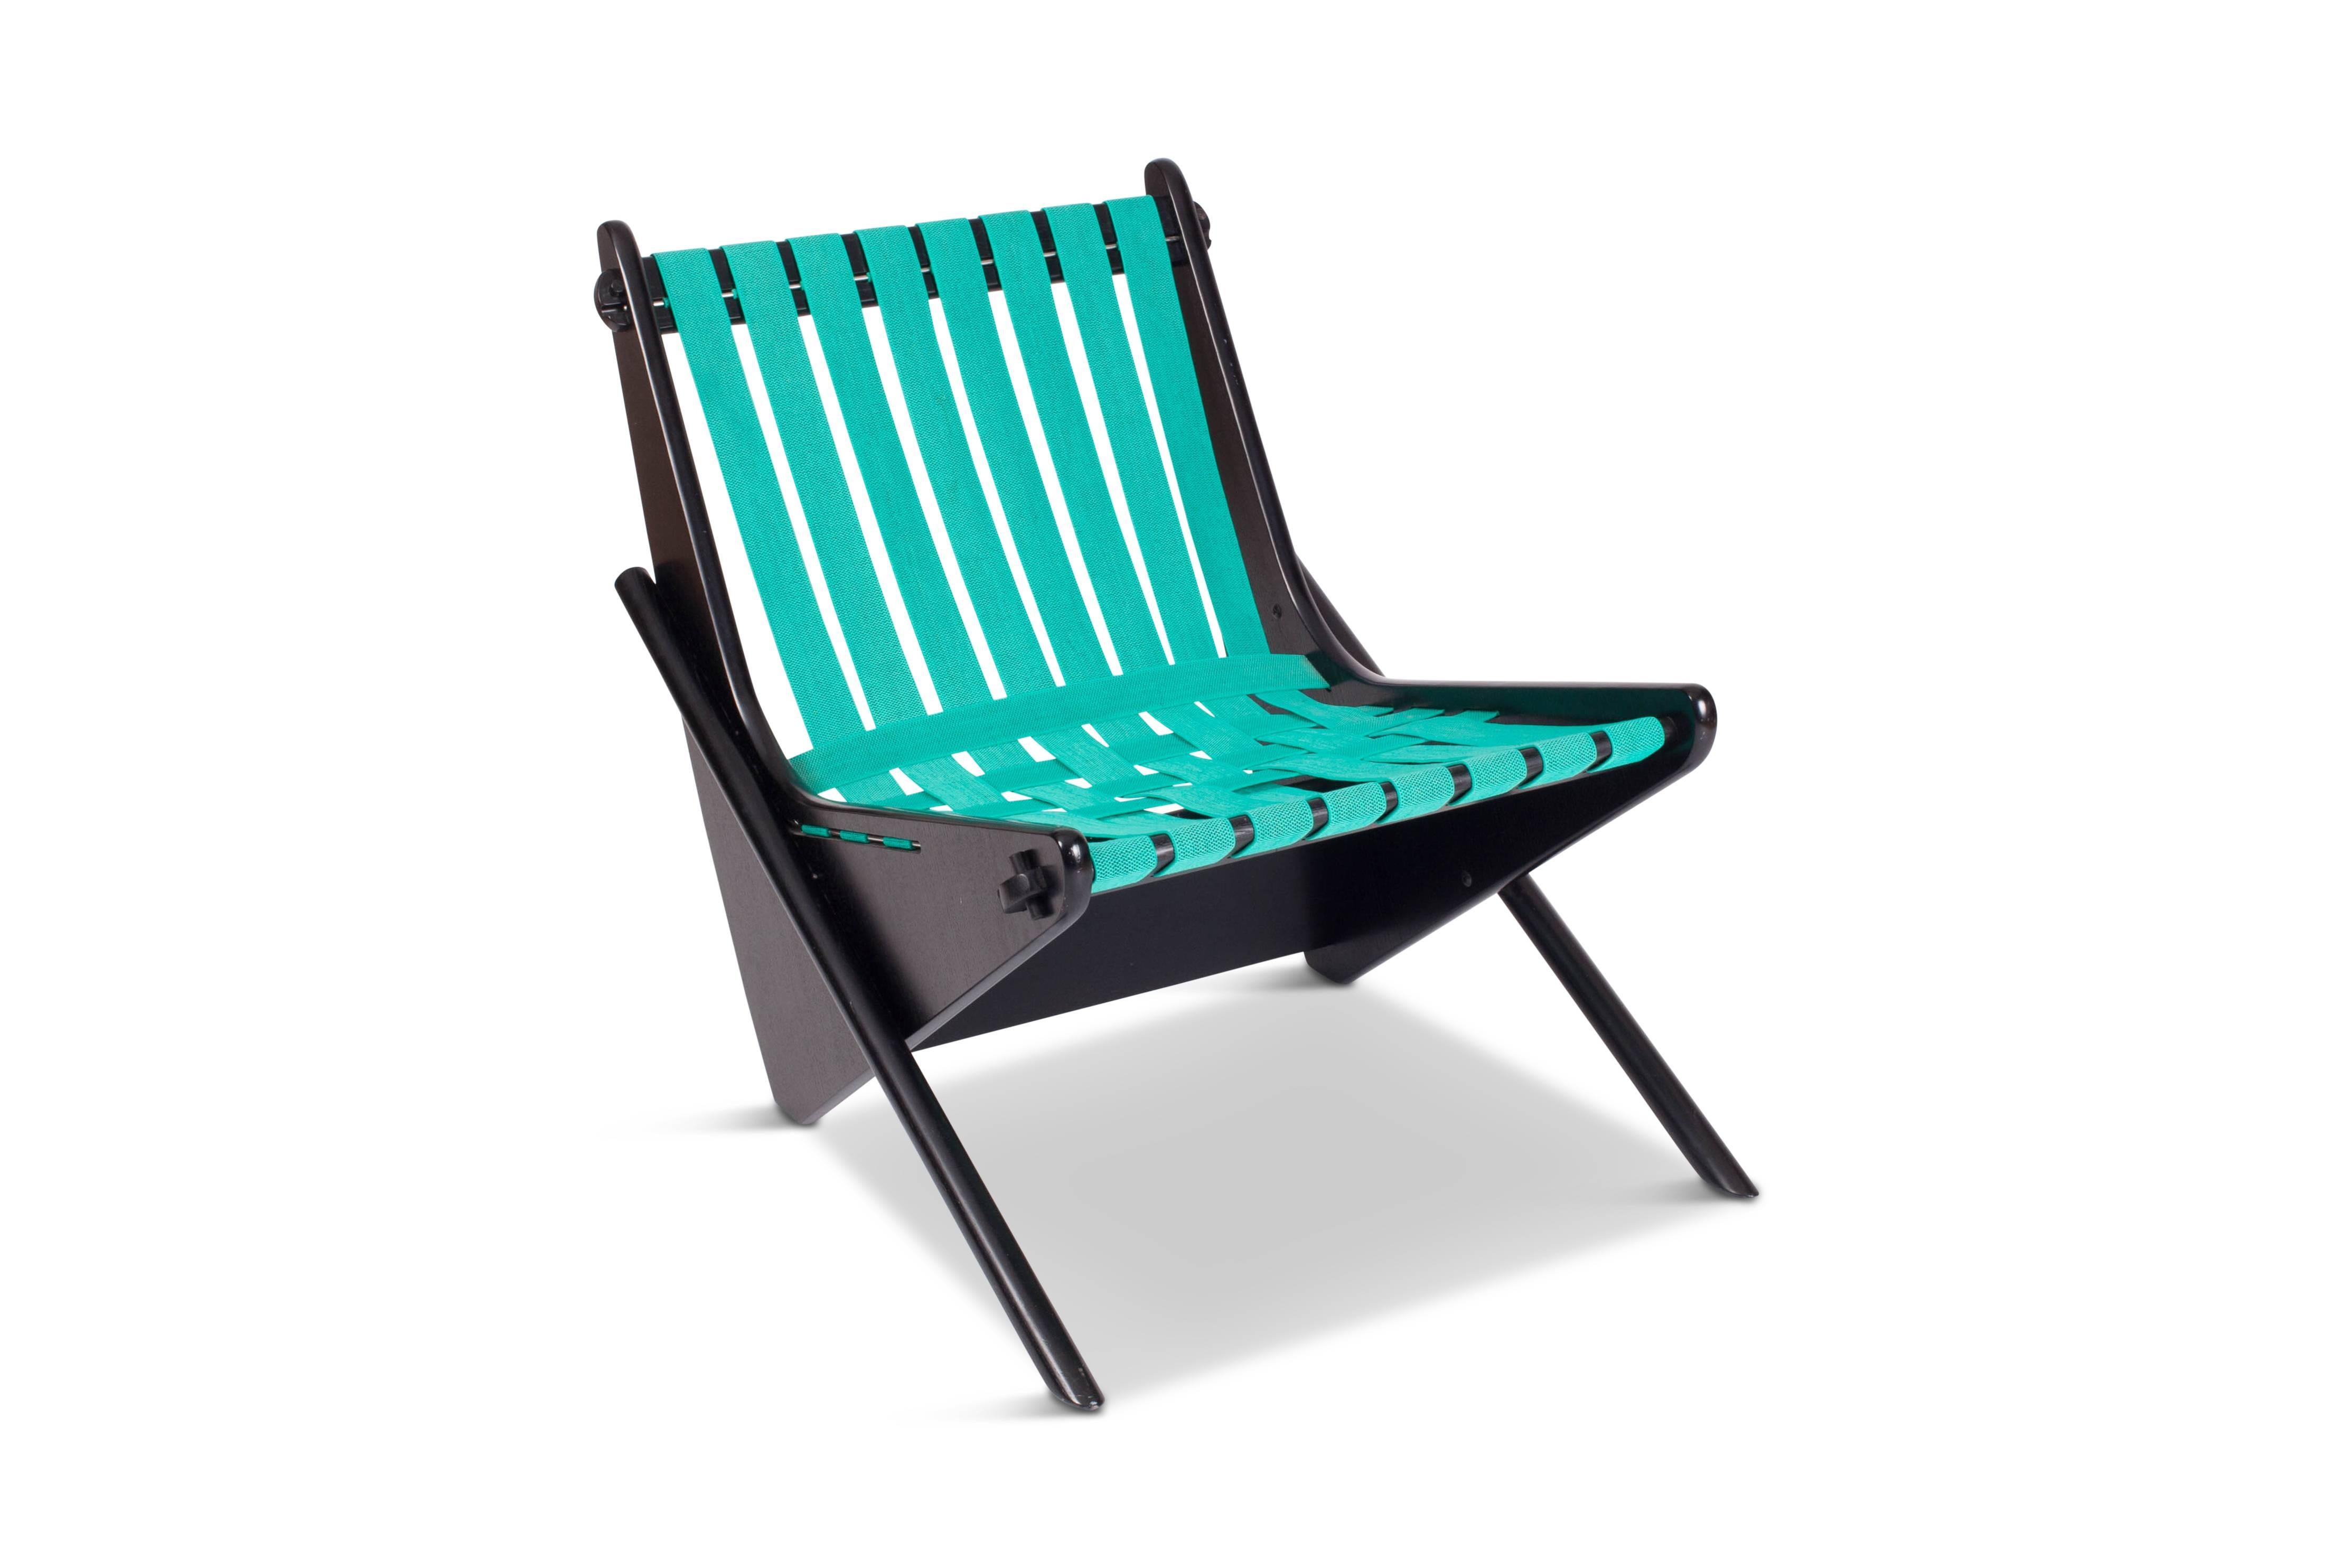 Mid-Century Modern Brazilian design  “Boomerang” Lounge Chair by Richard Neutra